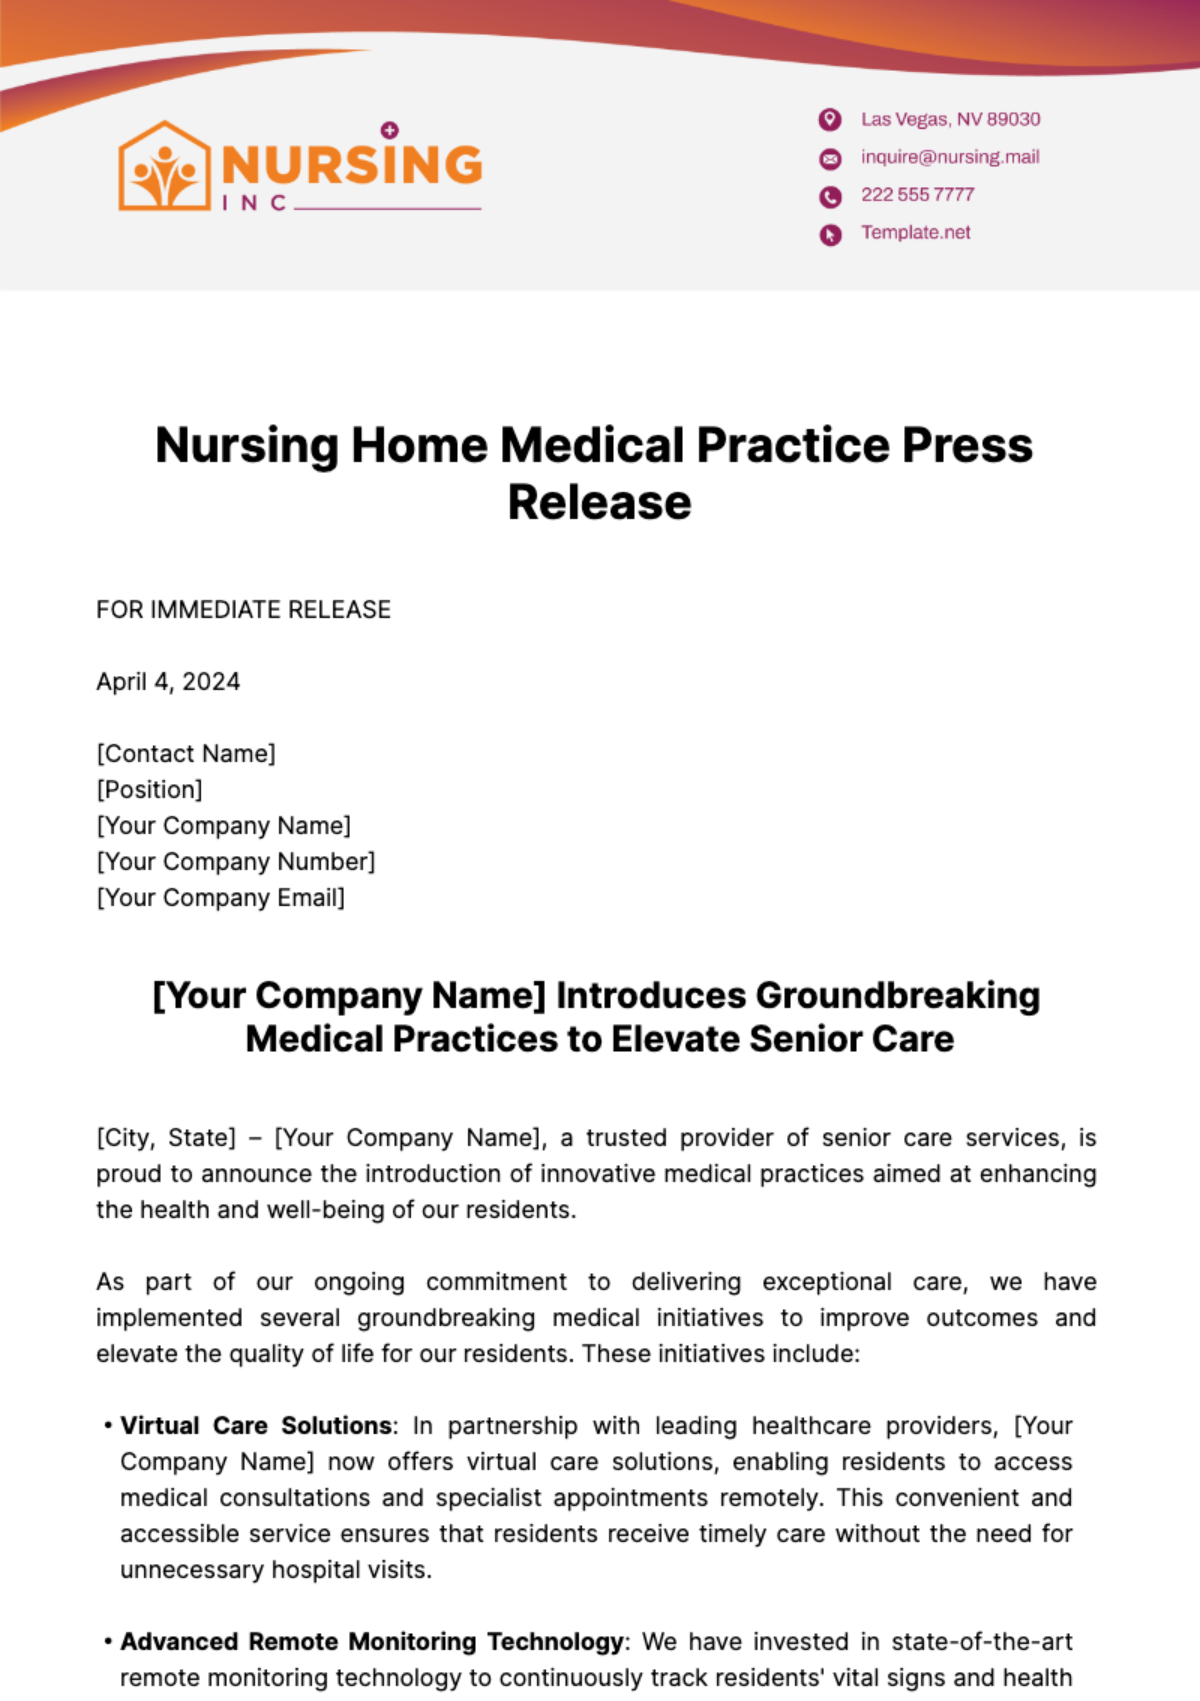 Nursing Home Medical Practice Press Release Template